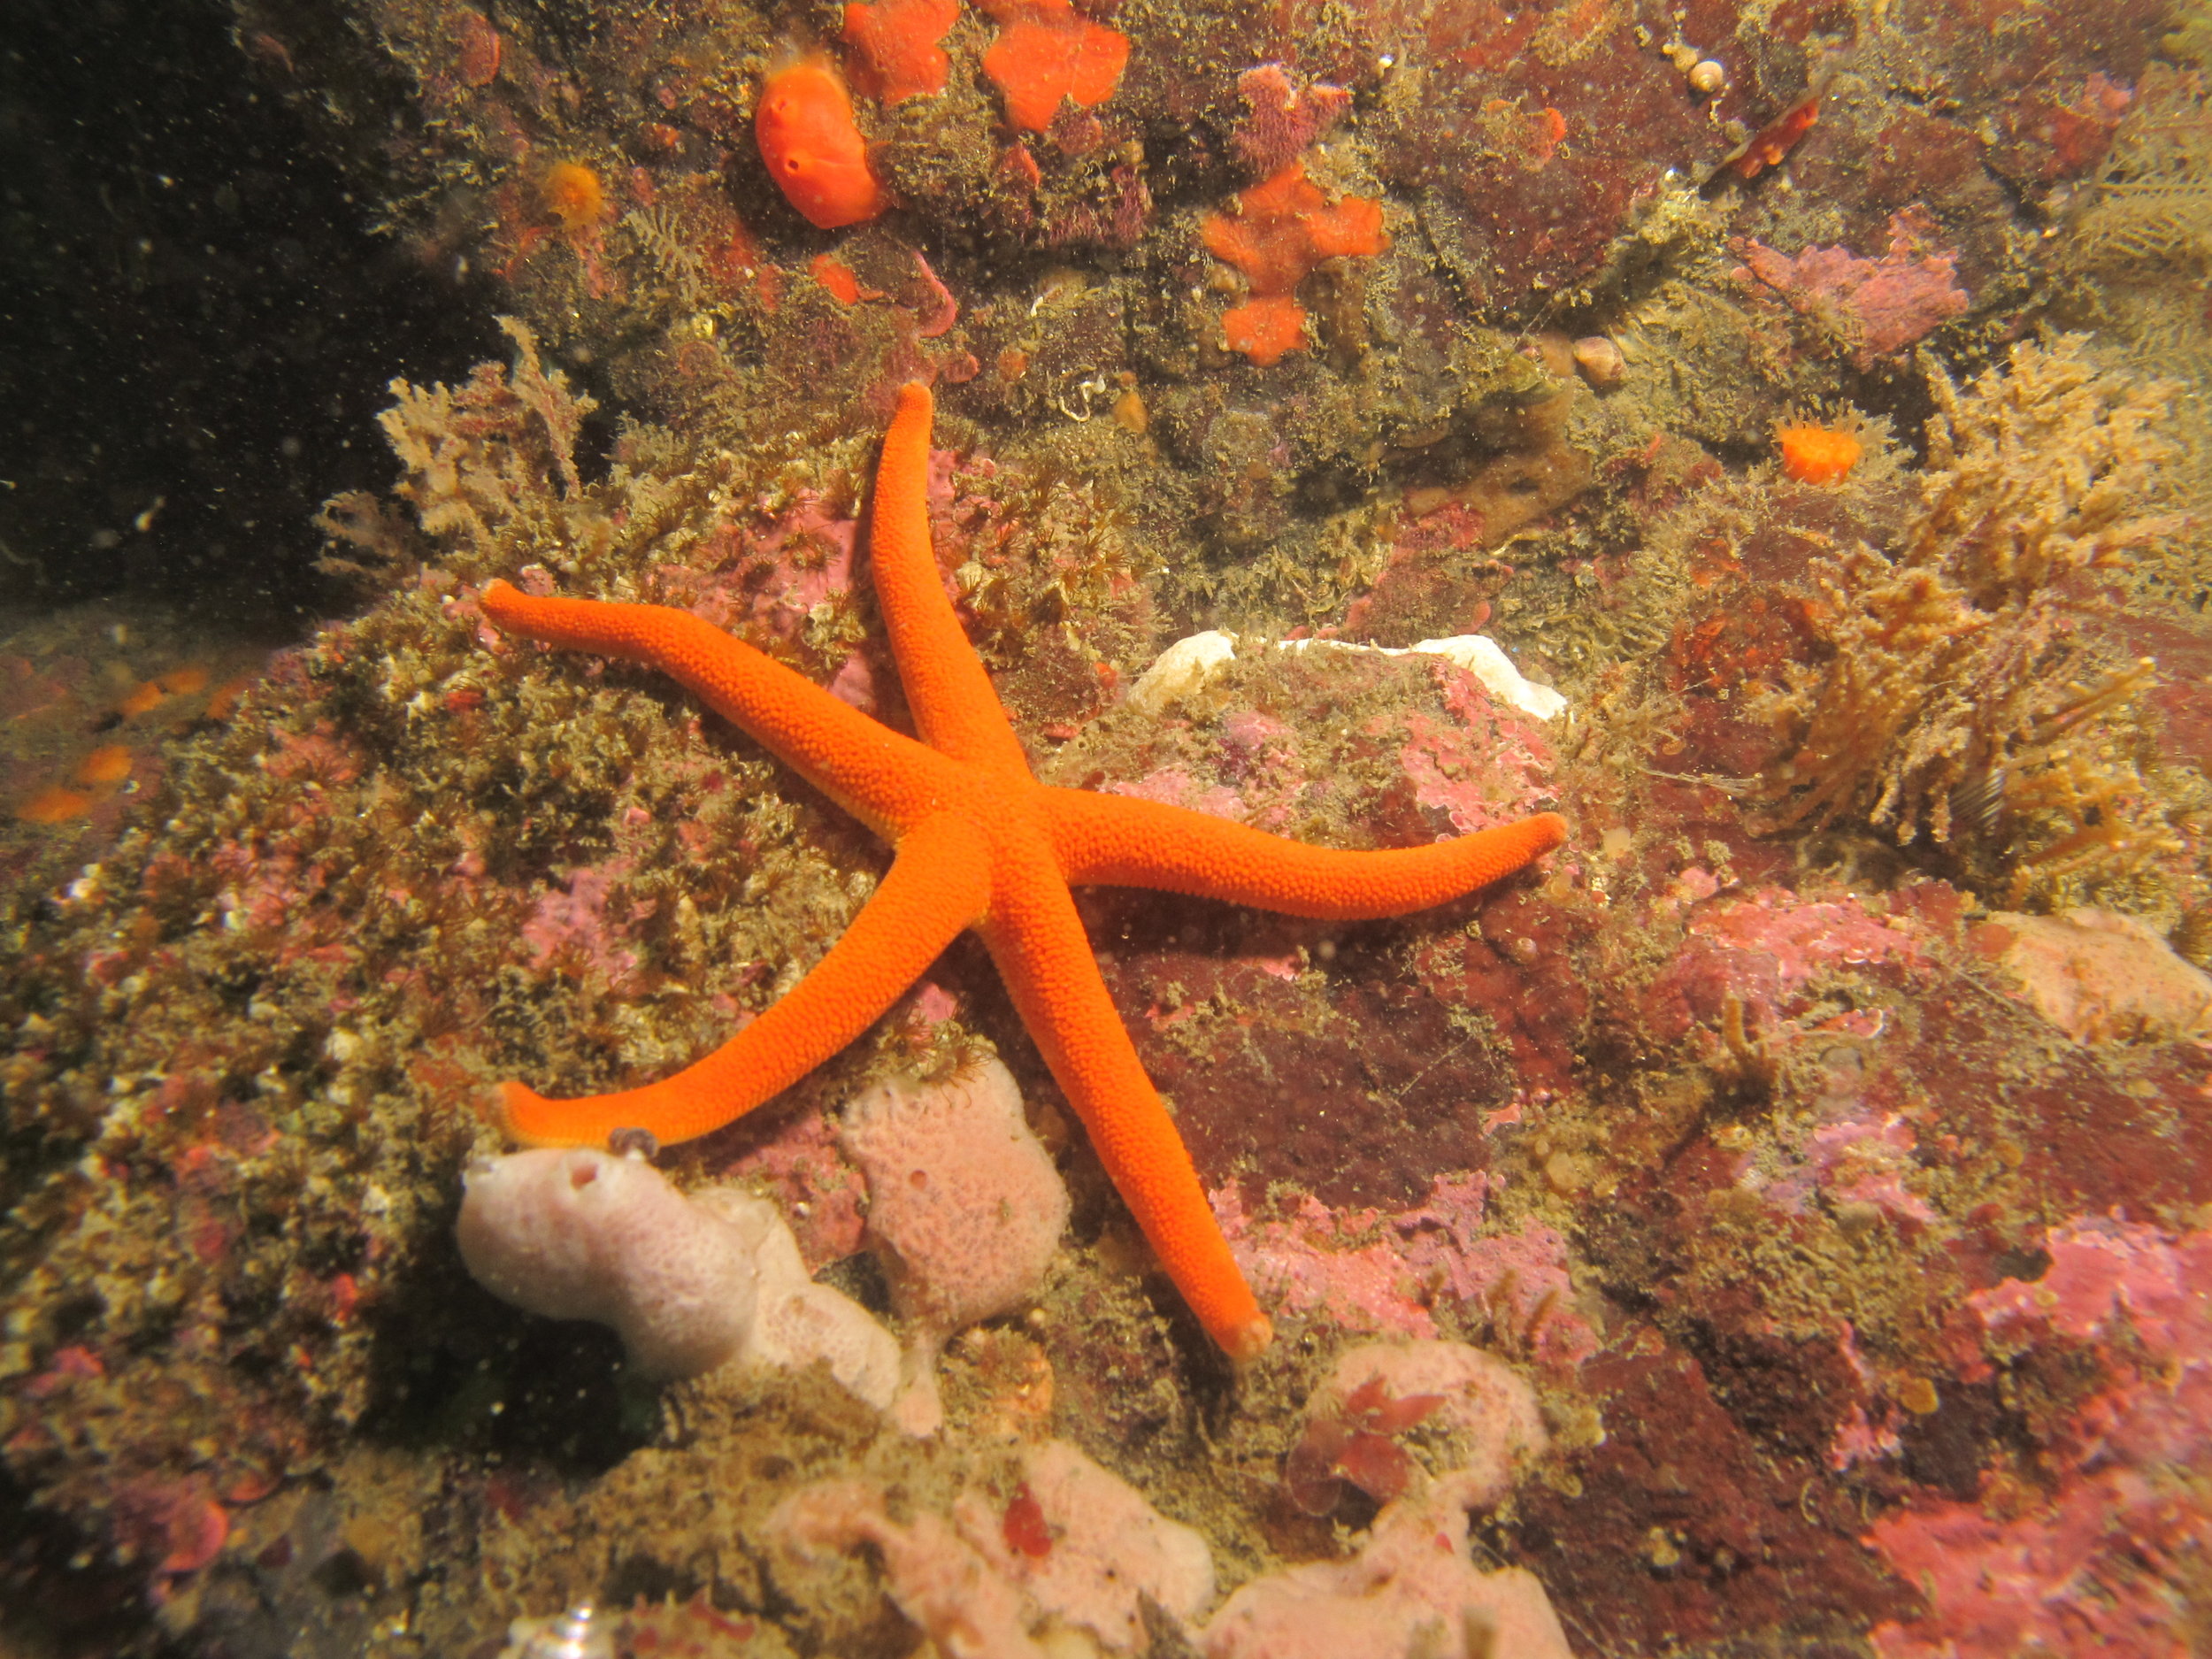 Stranded starfish at Rhossili Bay – Jessica's Nature Blog